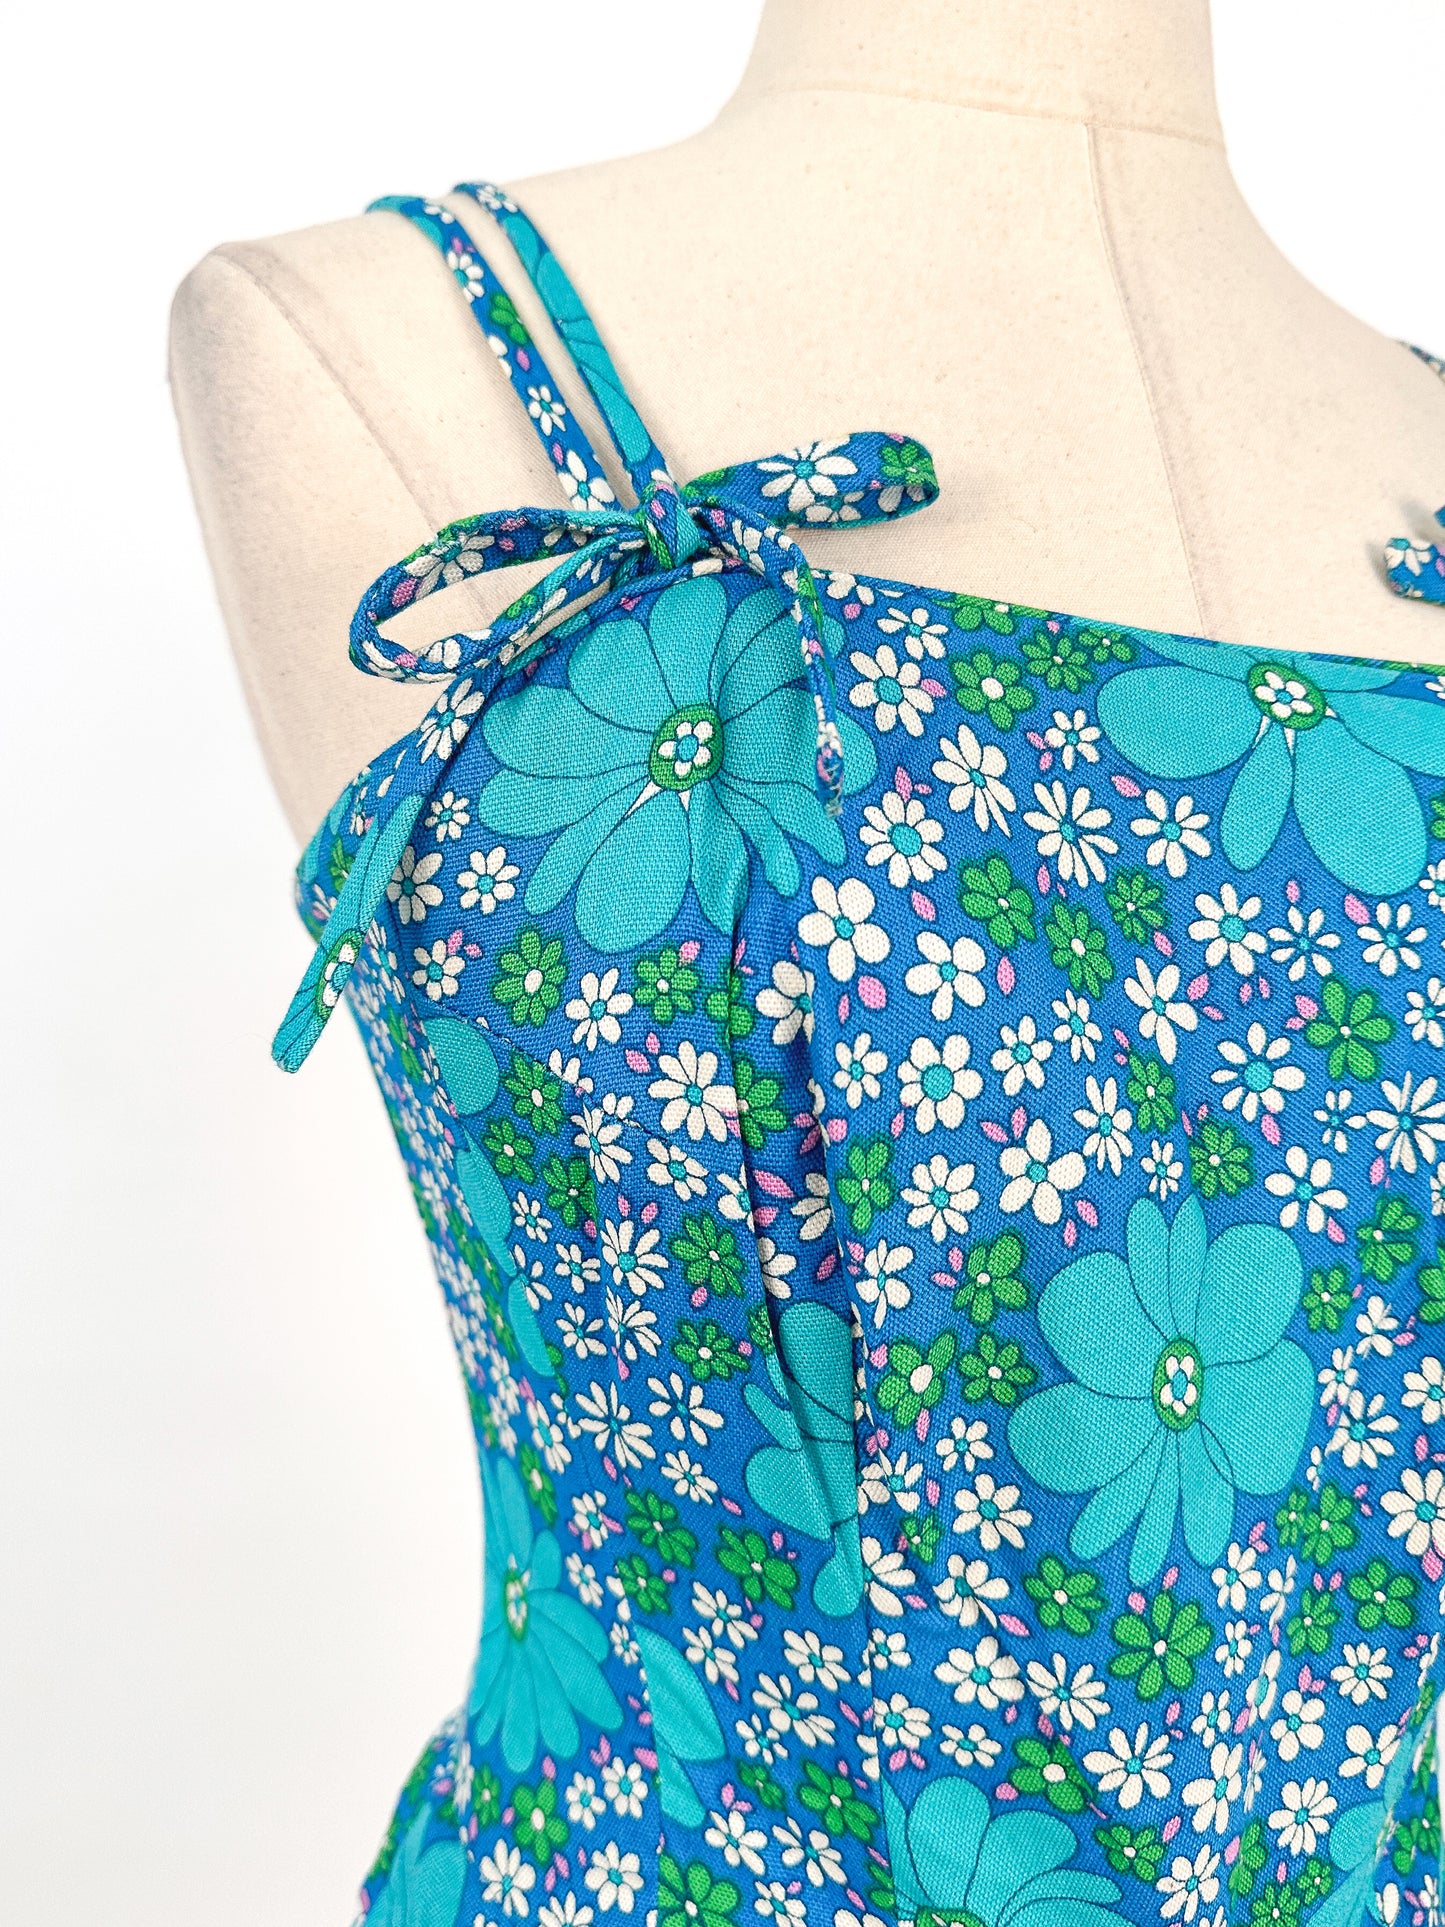 1960s Groovy Floral Cotton Playsuit / Waist 26